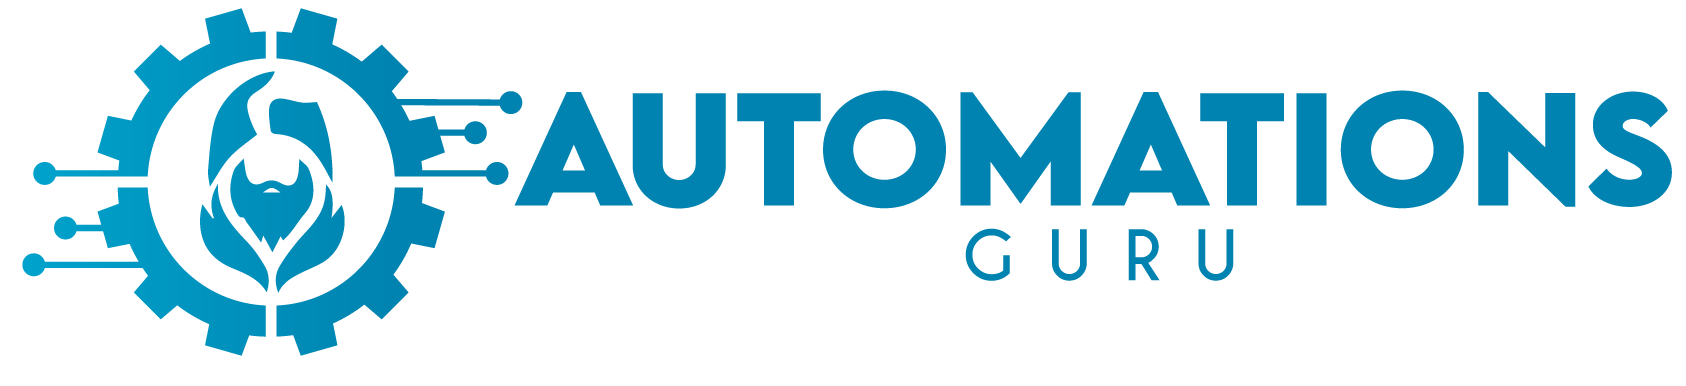 Automations Guru Logo